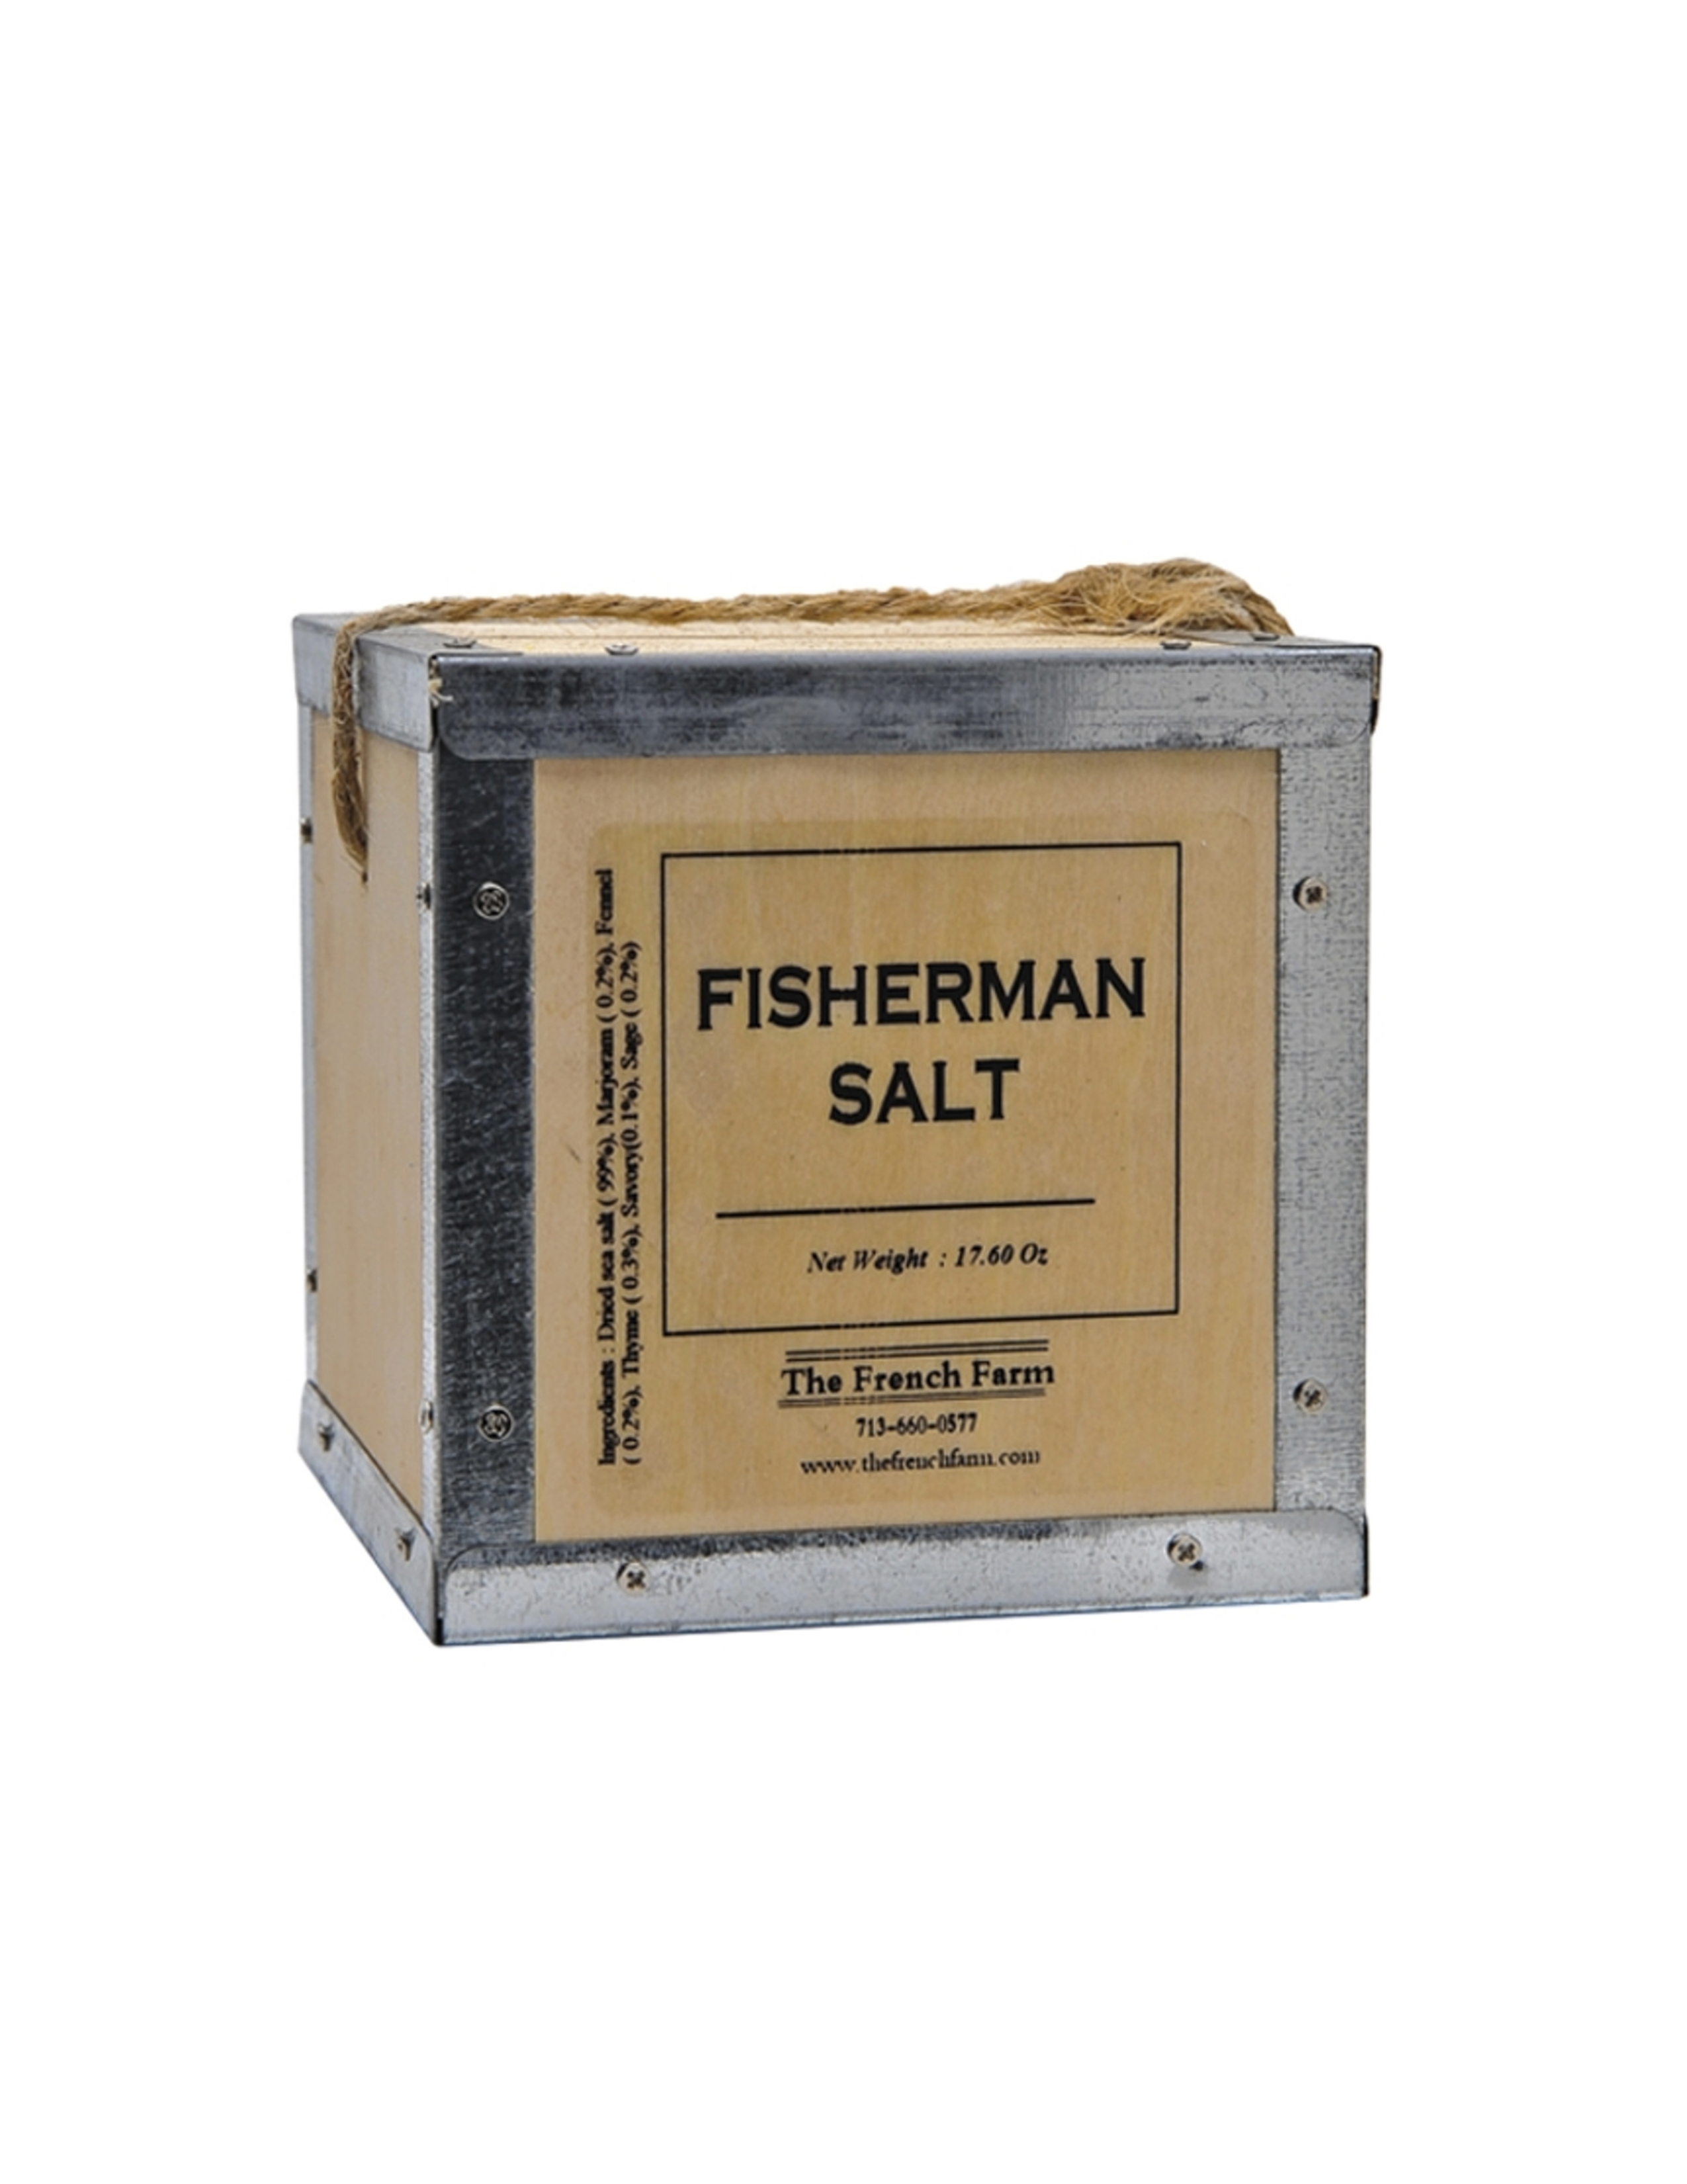 The Fisherman Salt Box